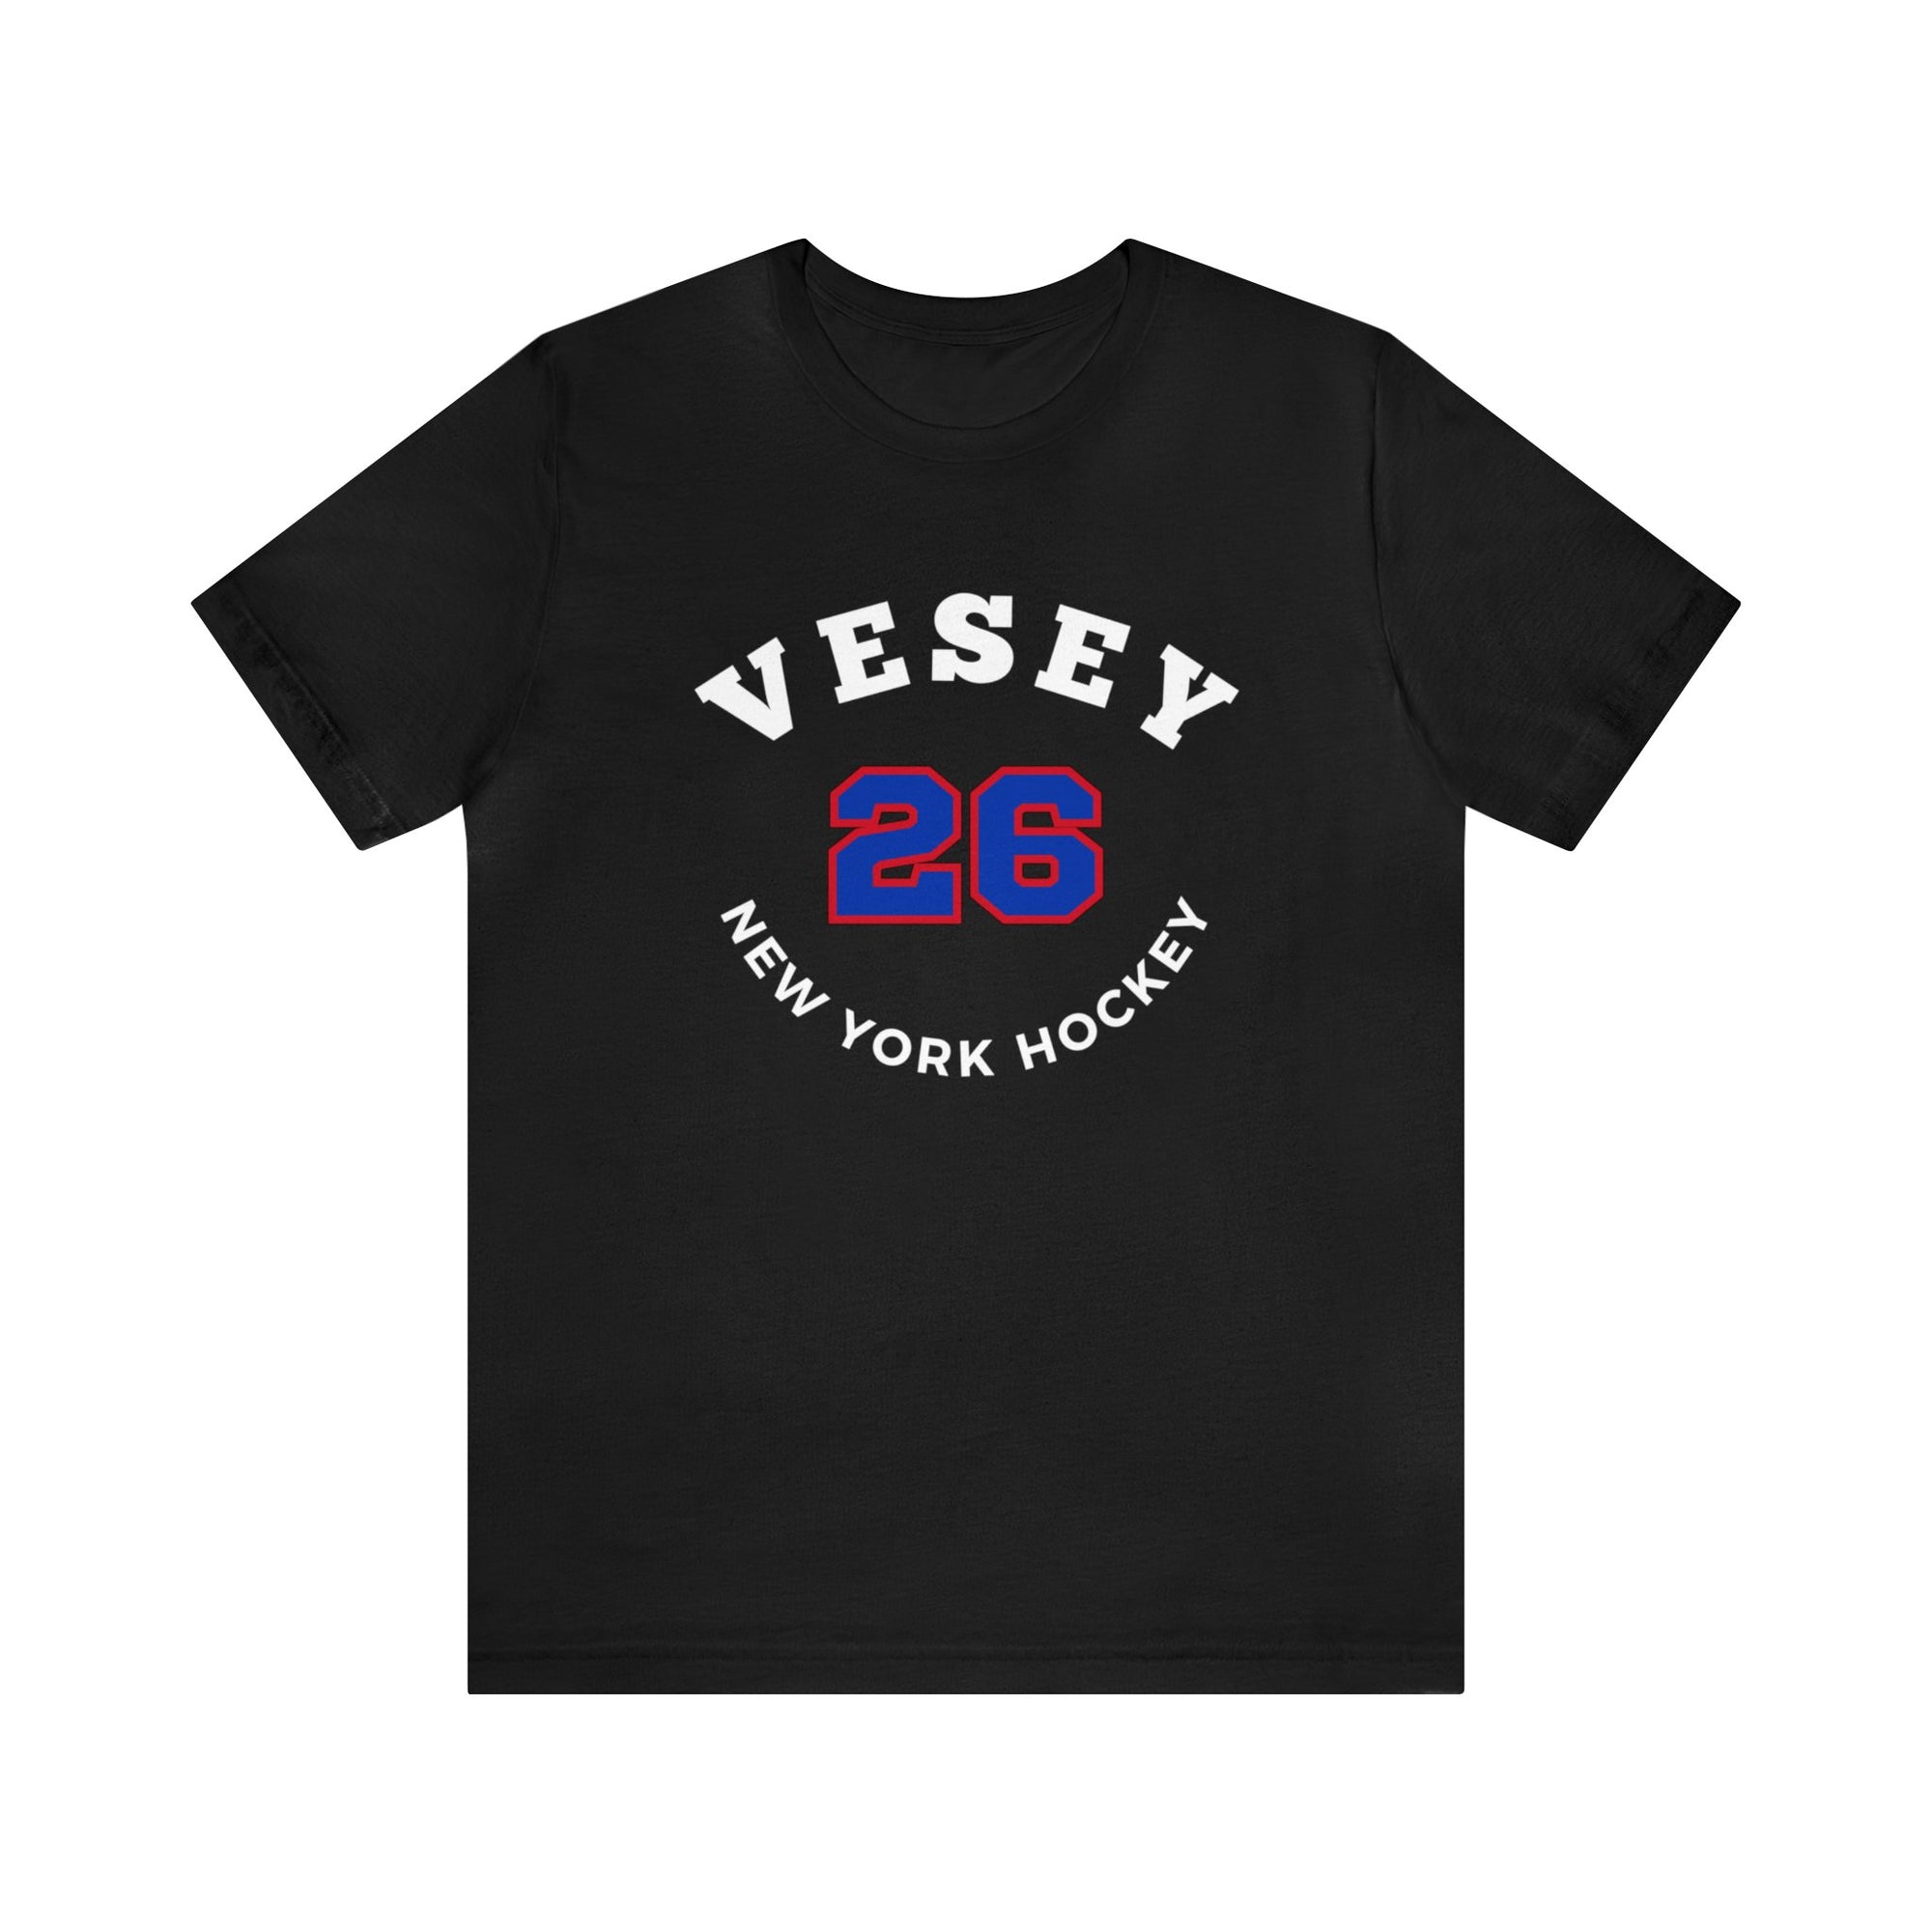 Vesey 26 New York Hockey Number Arch Design Unisex T-Shirt